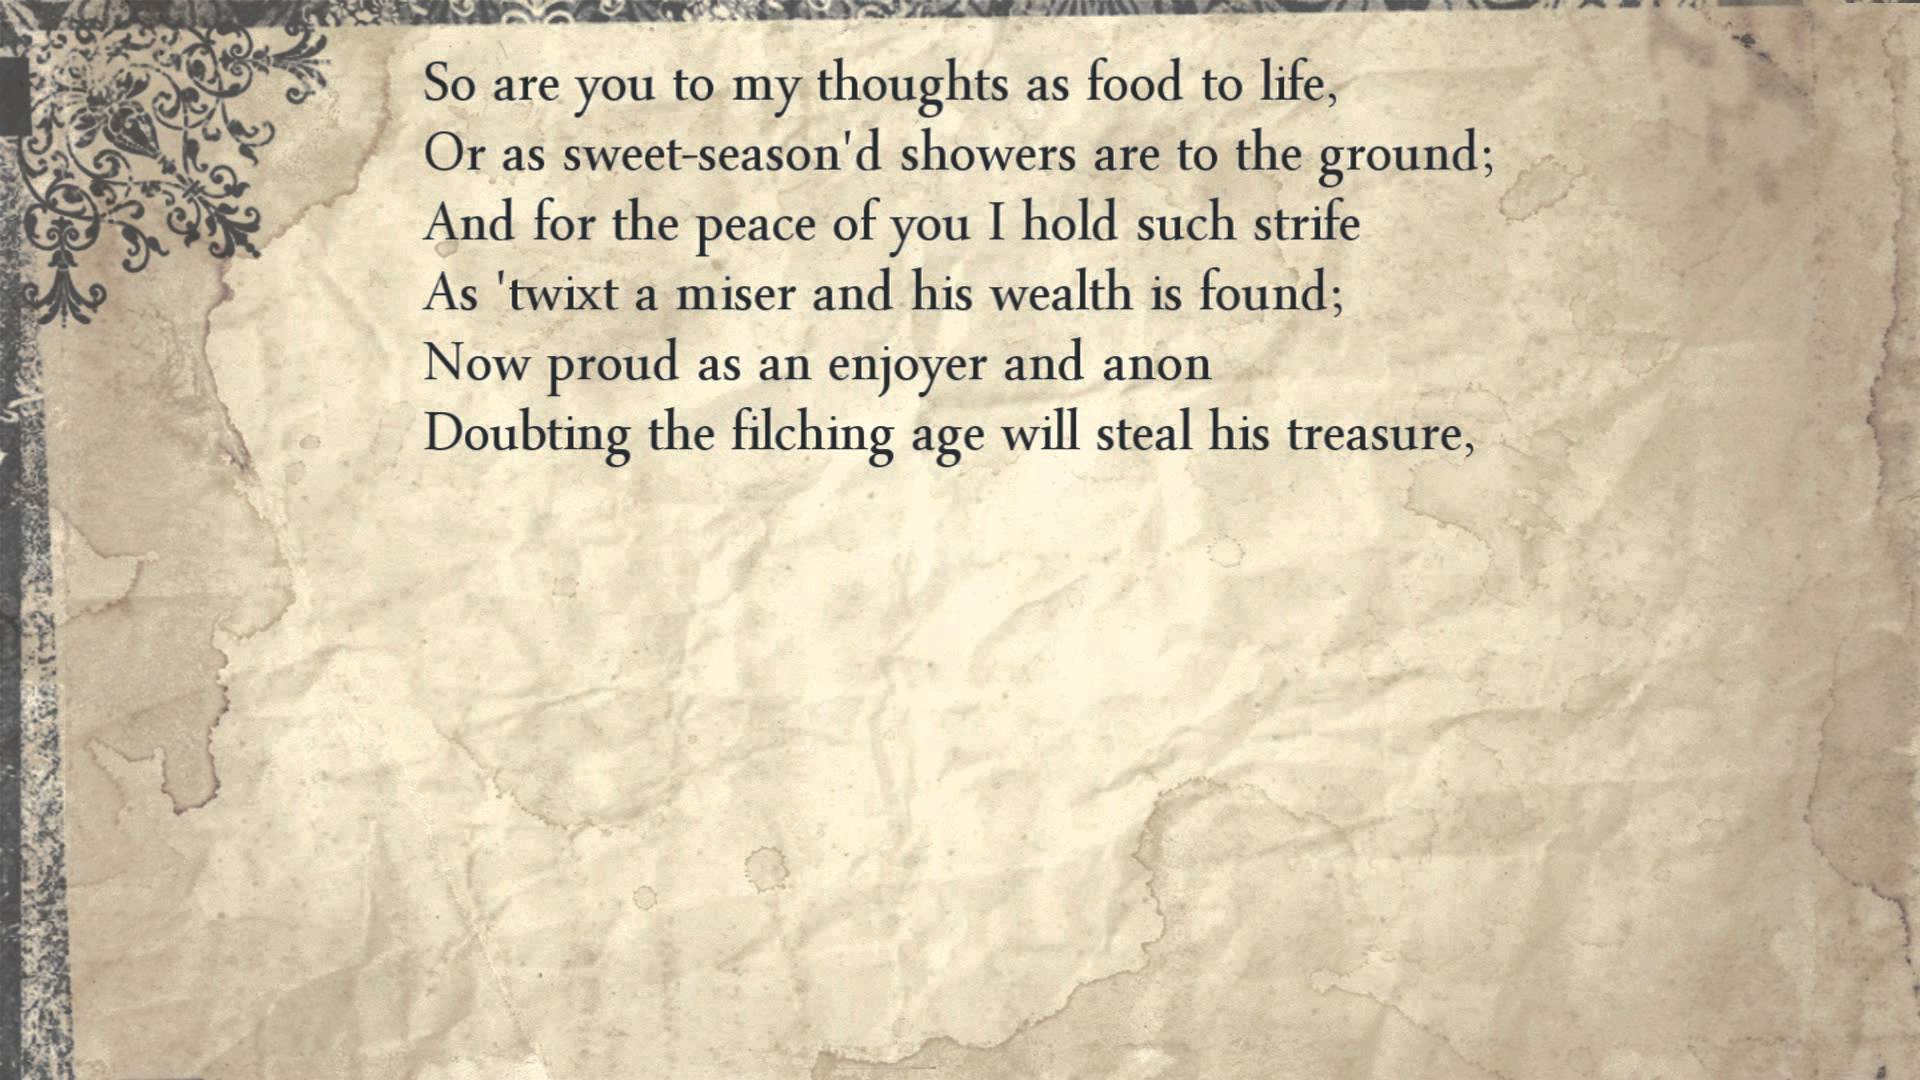 Top ten poems of william shakespeare